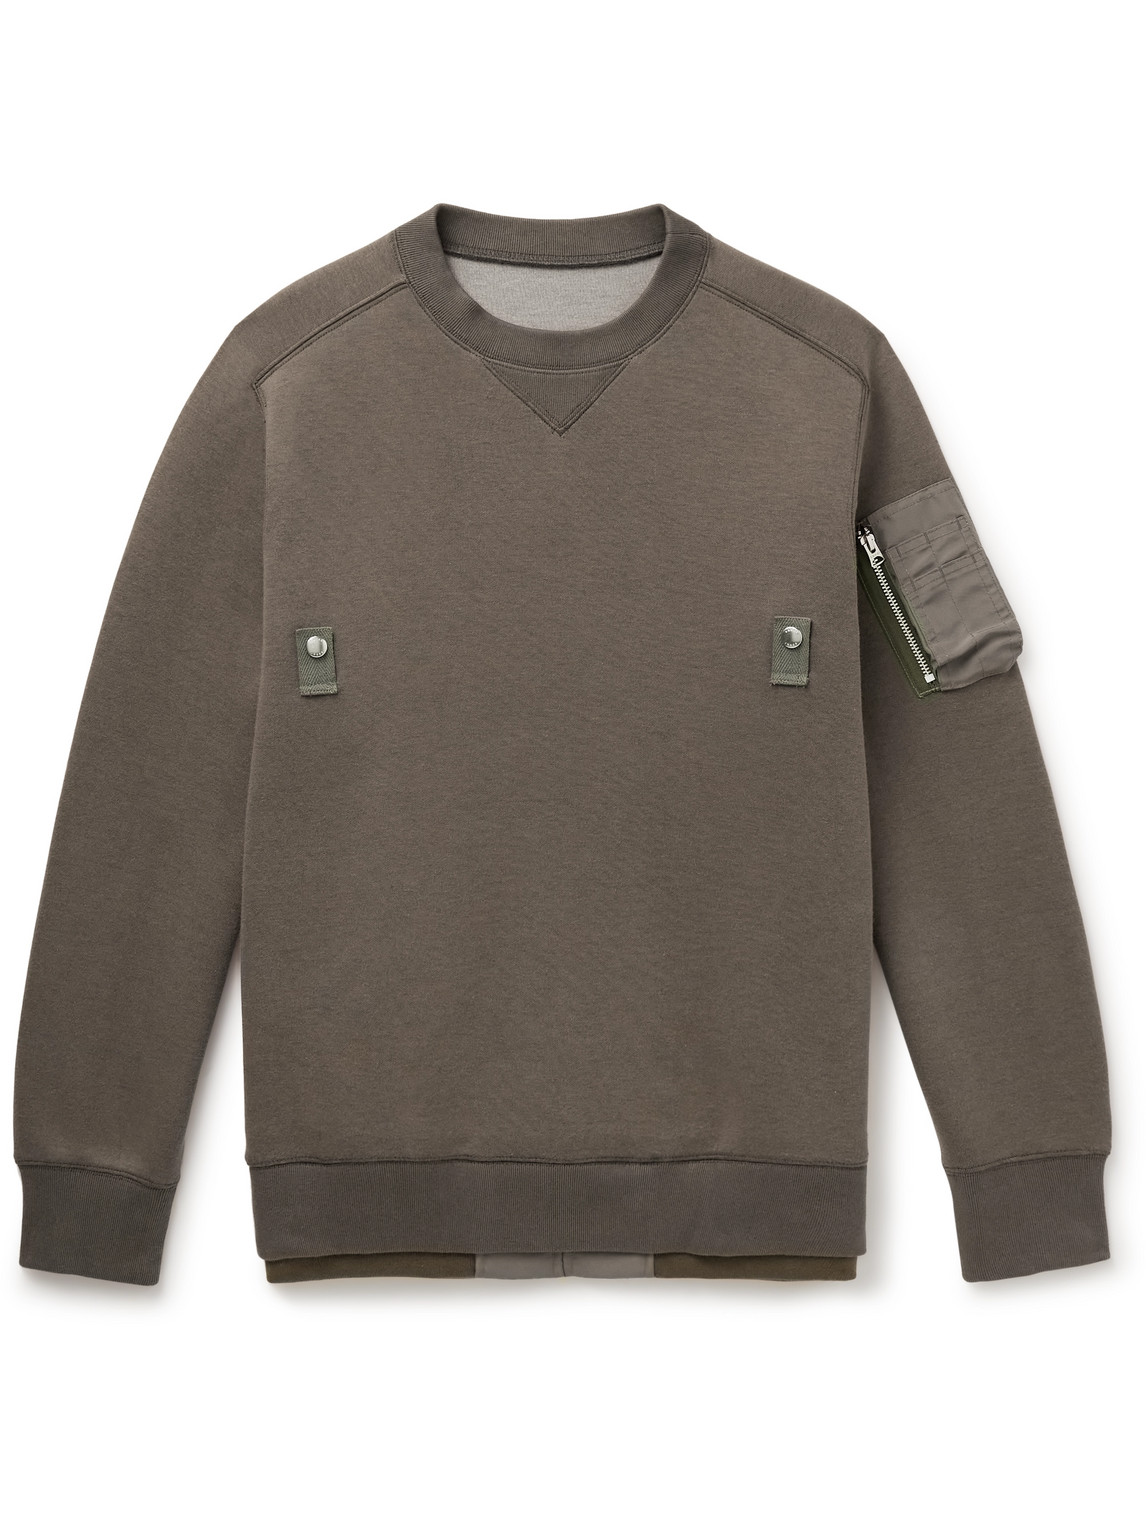 Nylon-Trimmed Cotton-Blend Jersey Sweatshirt